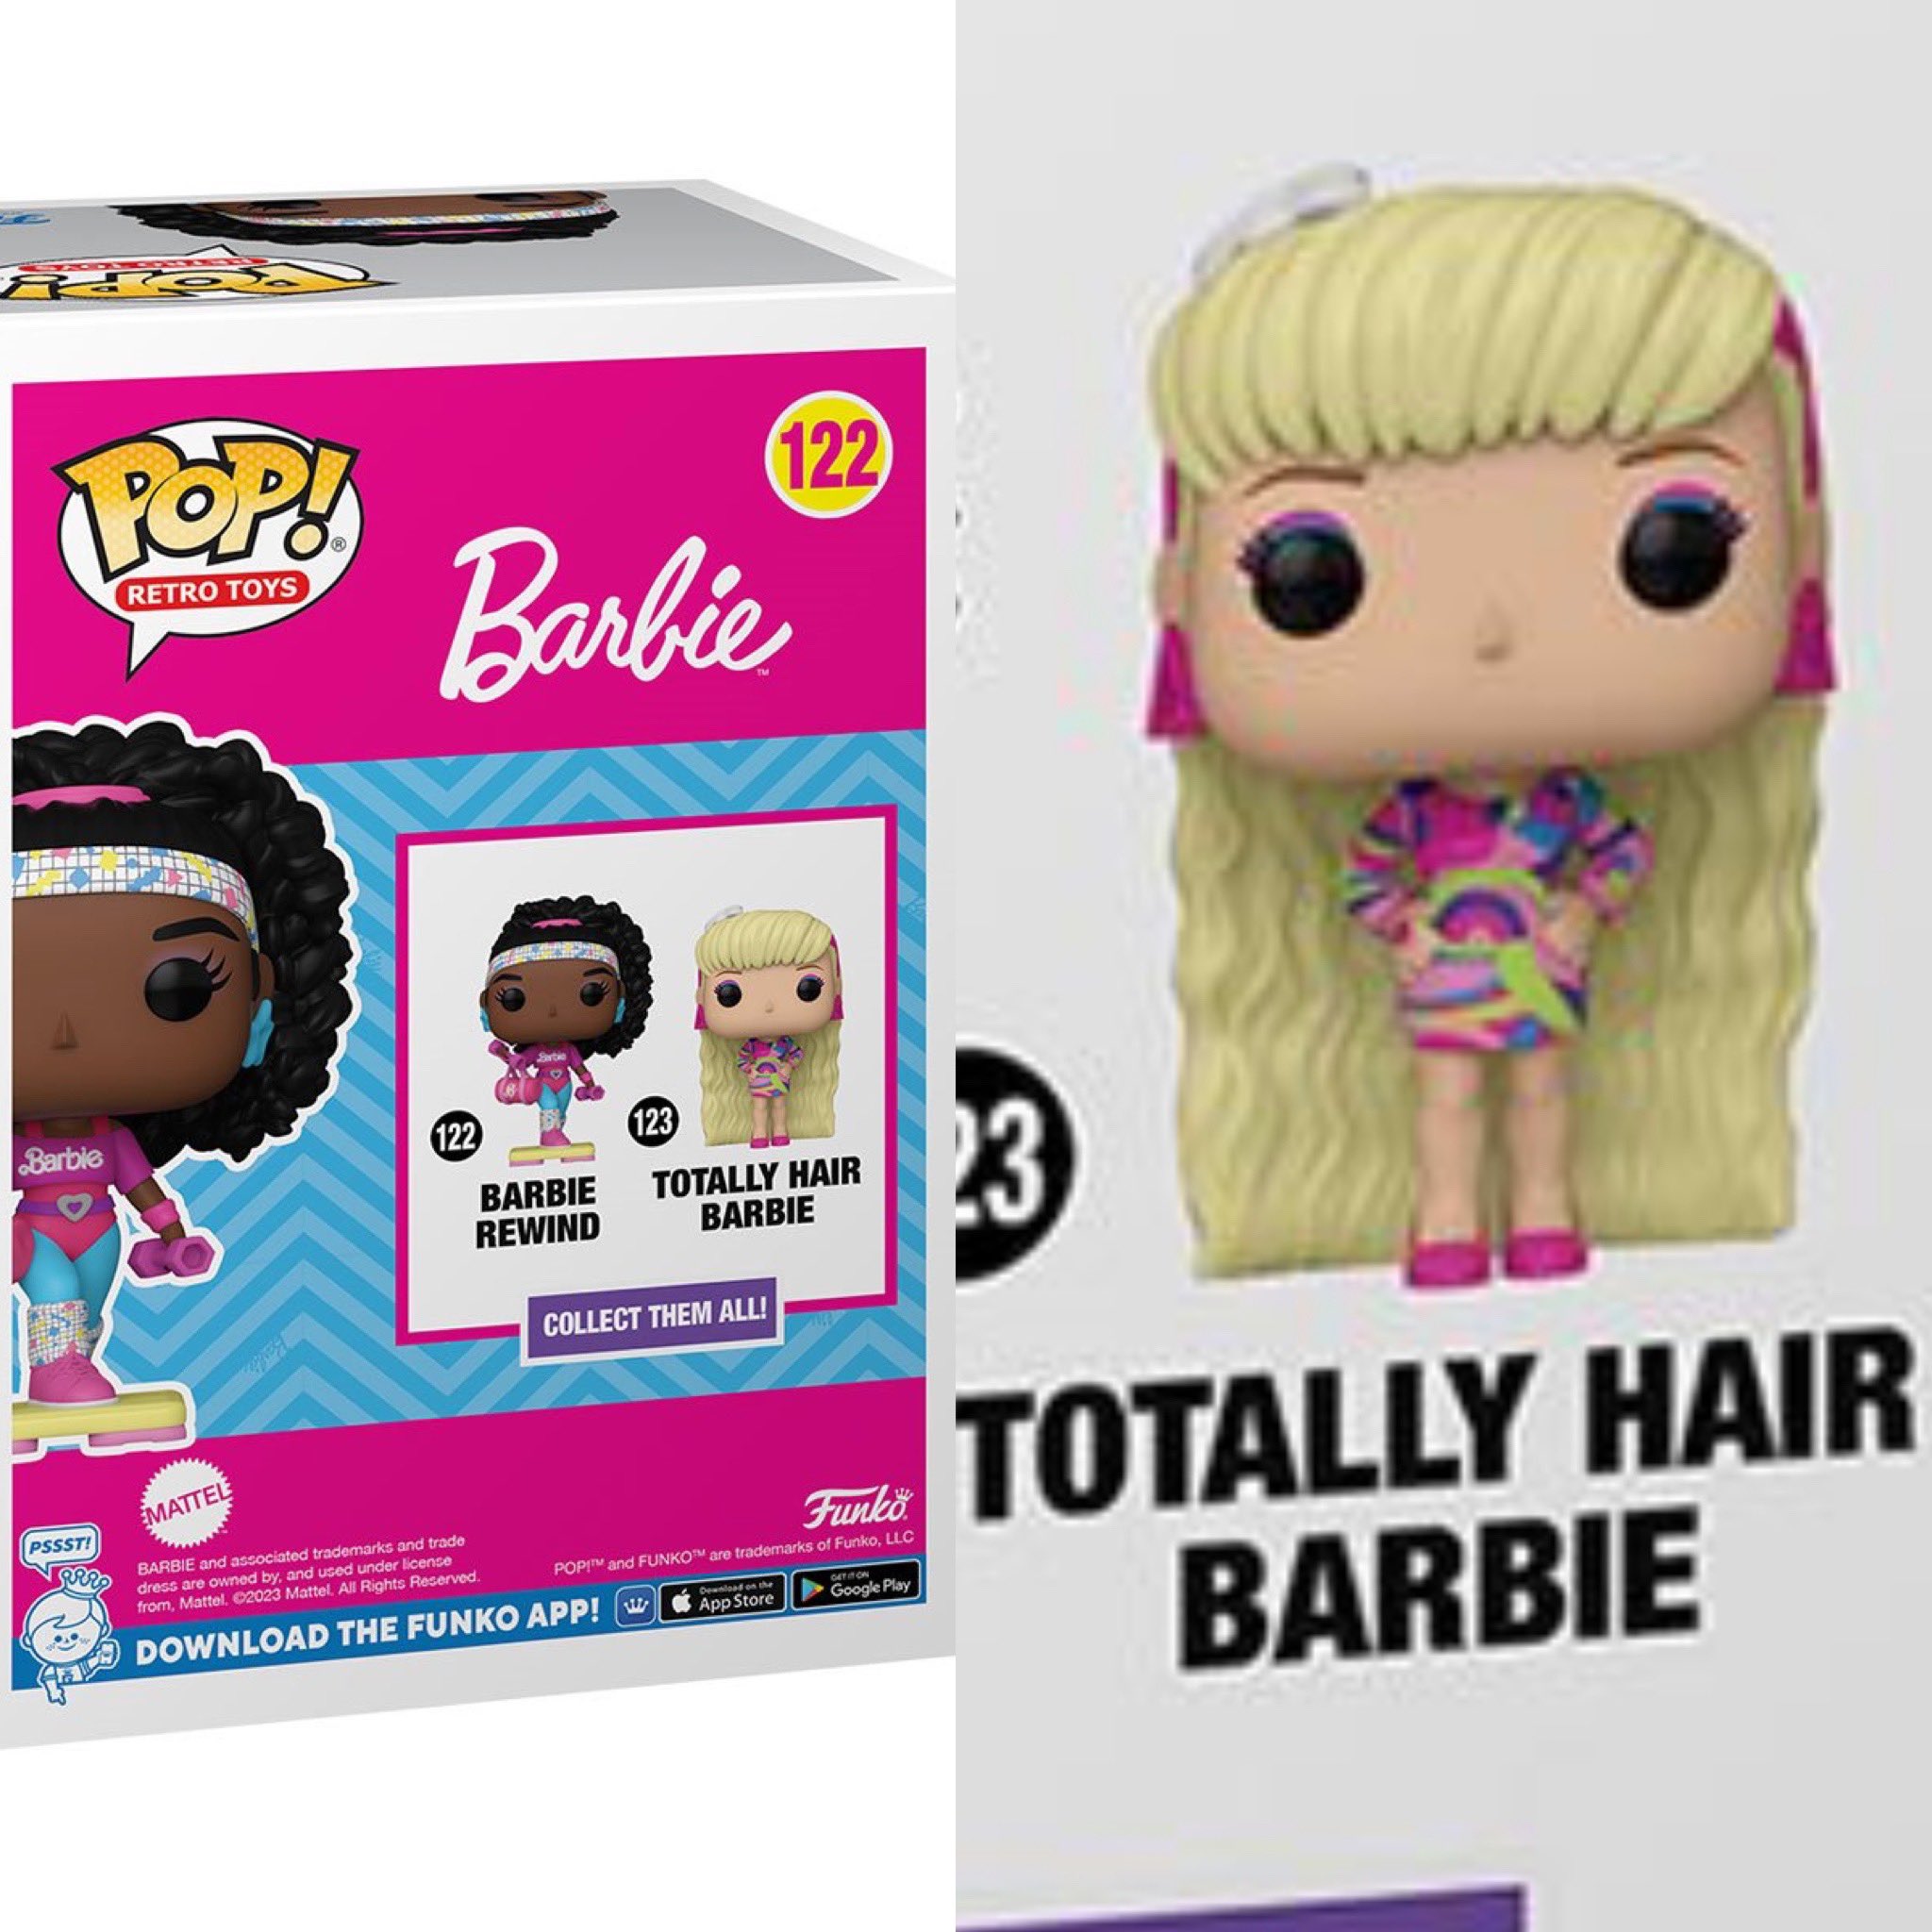 DisTrackers on X: First look at Totally Hair Barbie Pop! . #Barbie #Funko  #FunkoPop #FunkoPopVinyl #Pop #PopVinyl #Collectibles #Collectible  #DisTrackers  / X